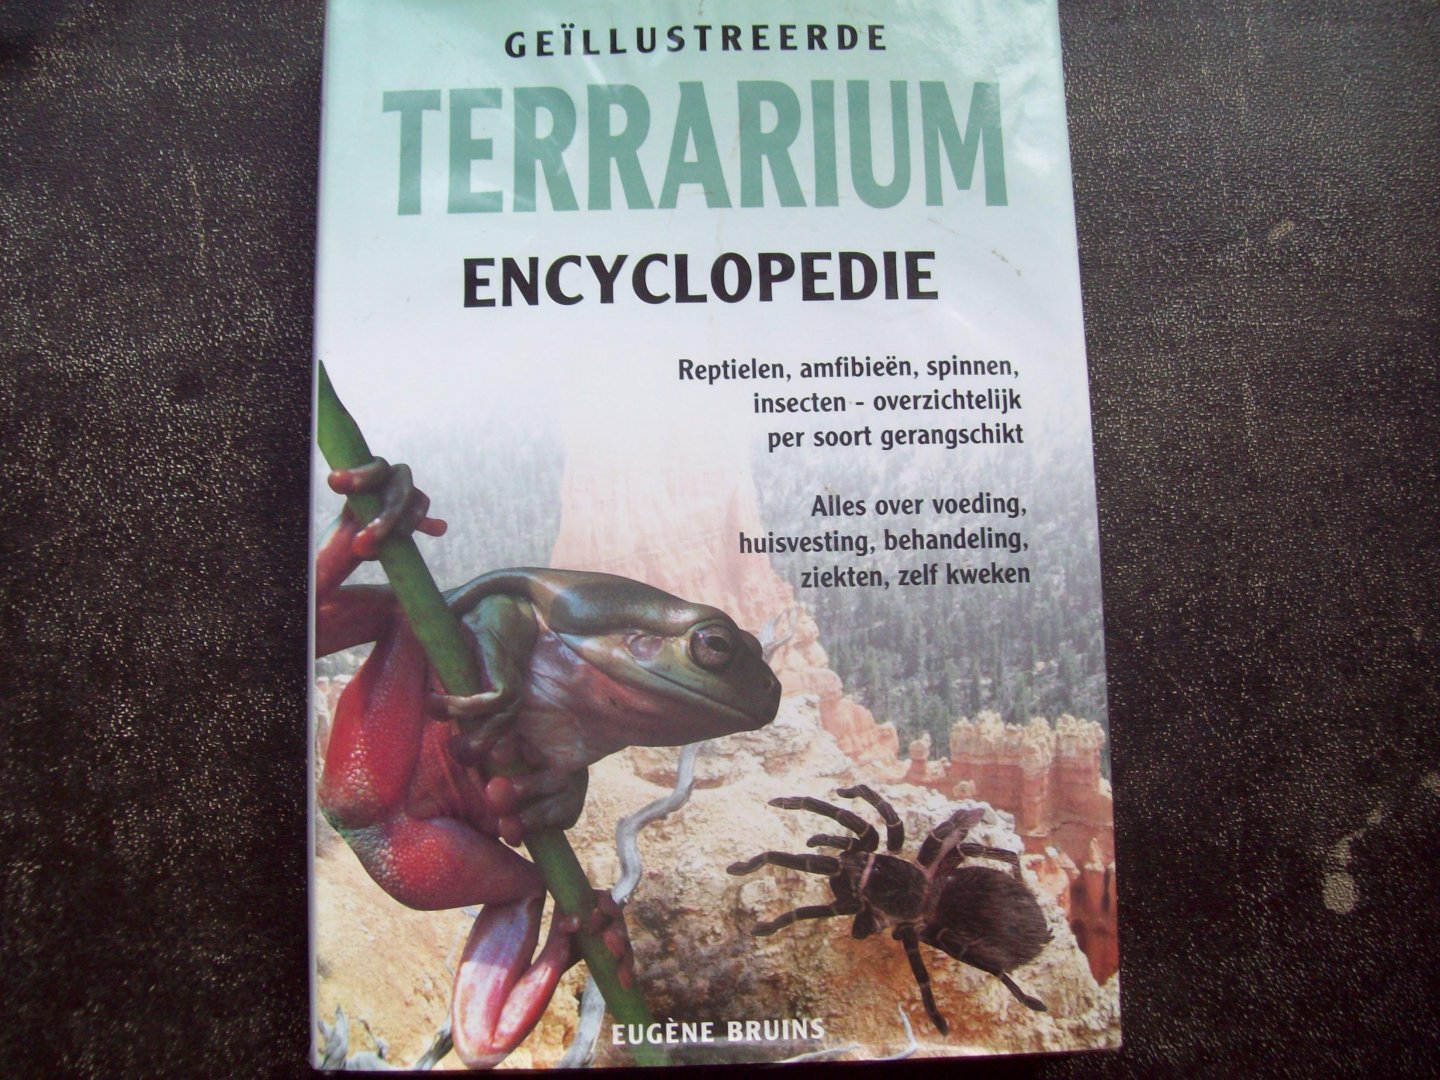 Eugène Bruins - "Geïllustreerde Terrarium Encyclopedie"  Reptielen - Amfibieën - Spinnen - Insekten